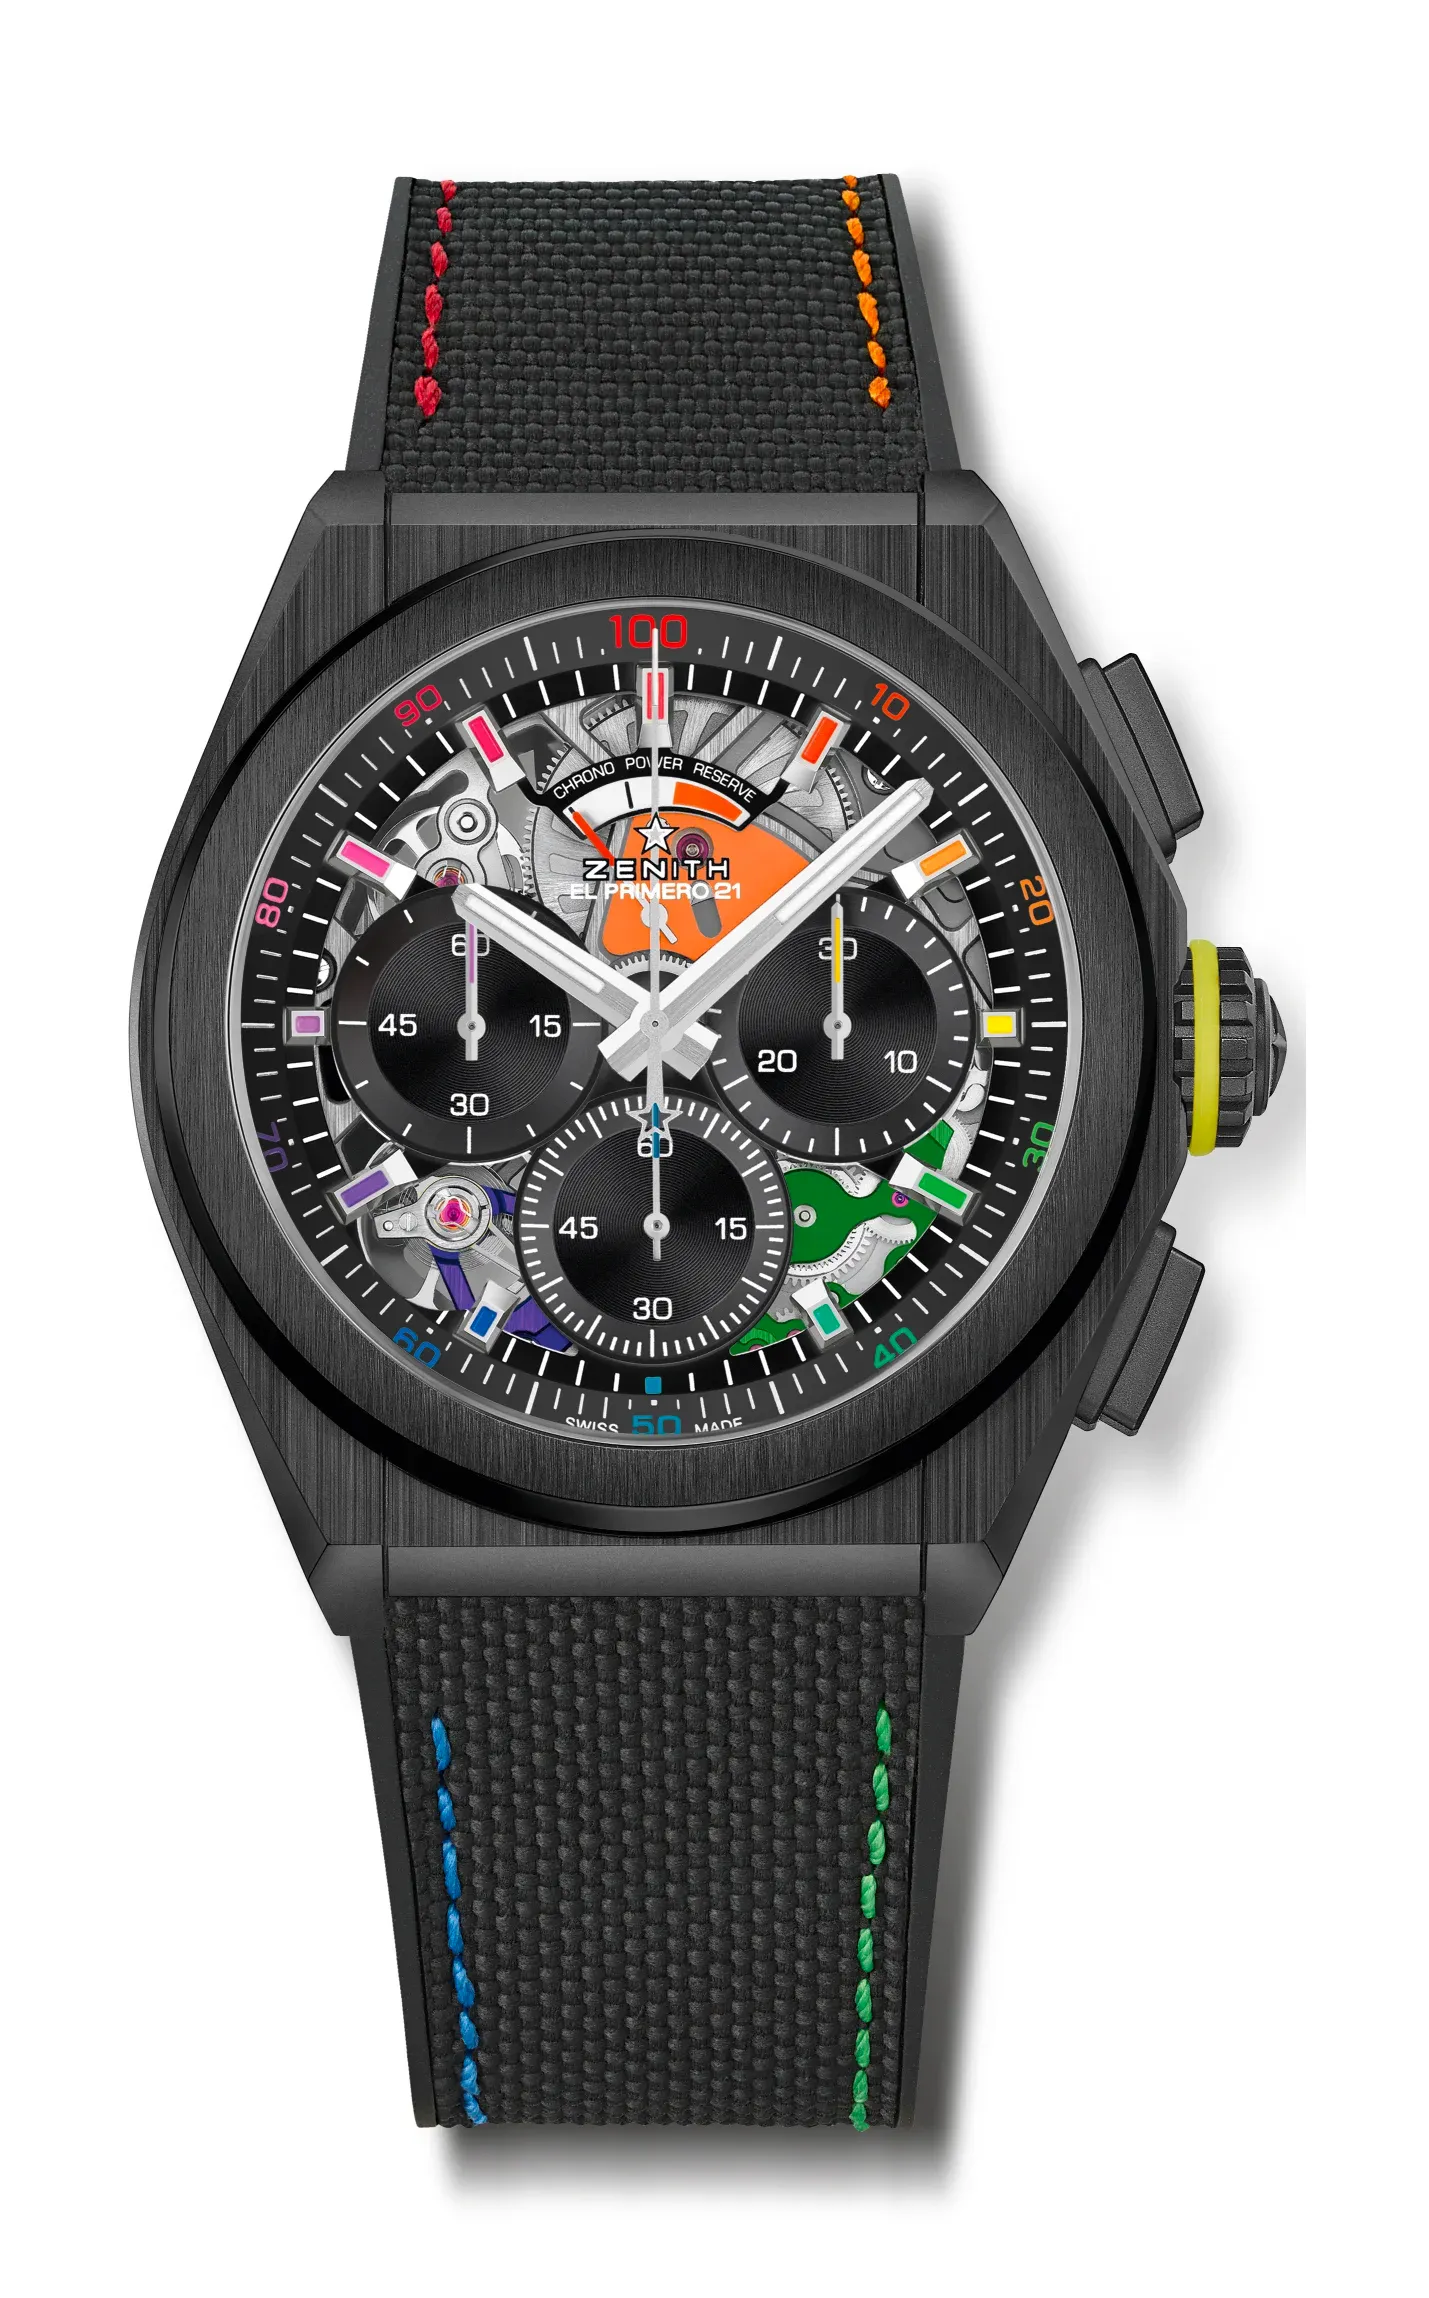 Relógio Tissot Ed. Especial Brasil 500 Anos 38mm Ouro 18k - Watch